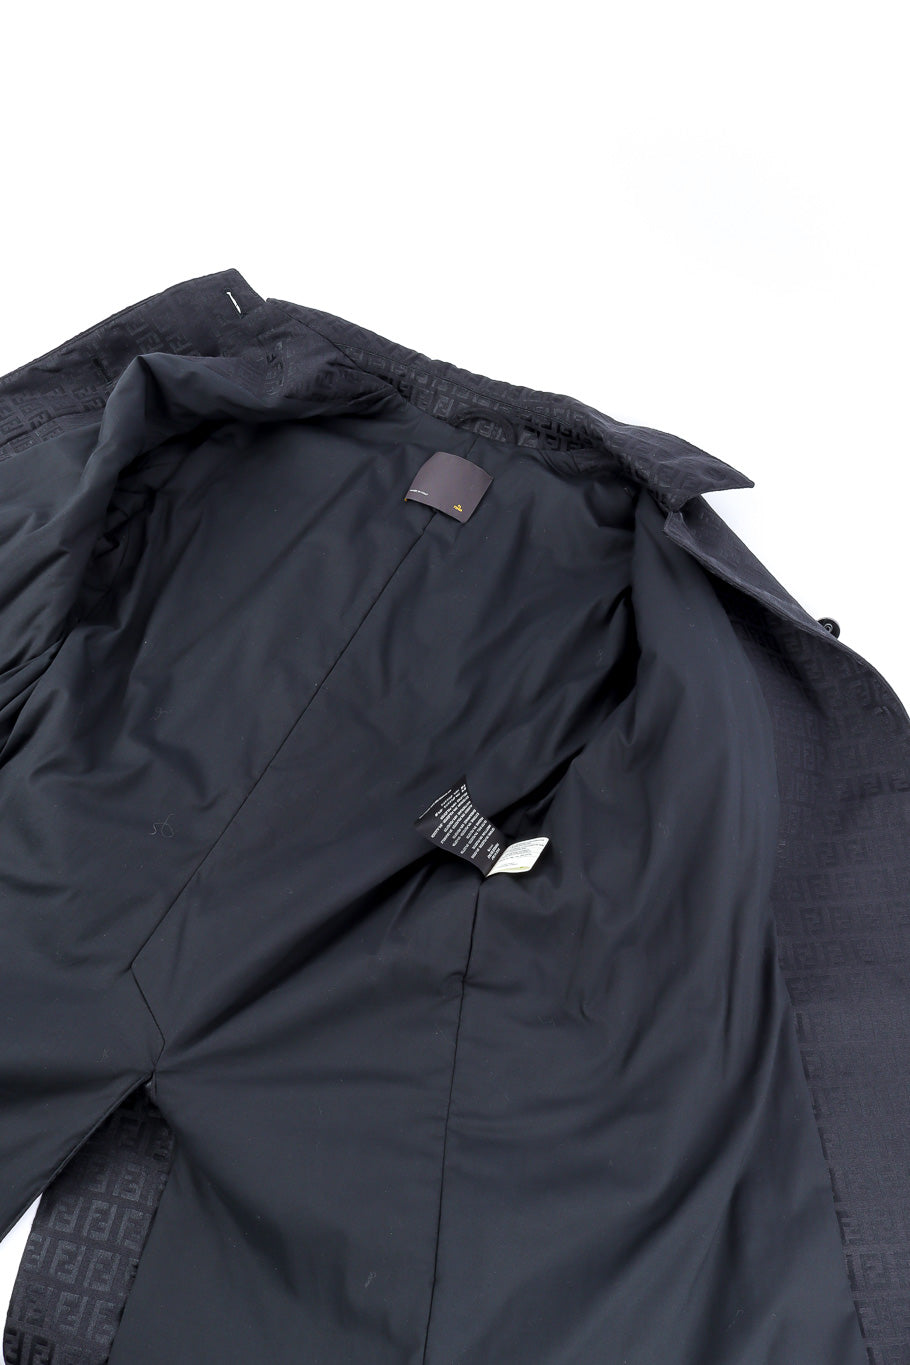 Fendi zucca monogram trench coat inside lining @recessla